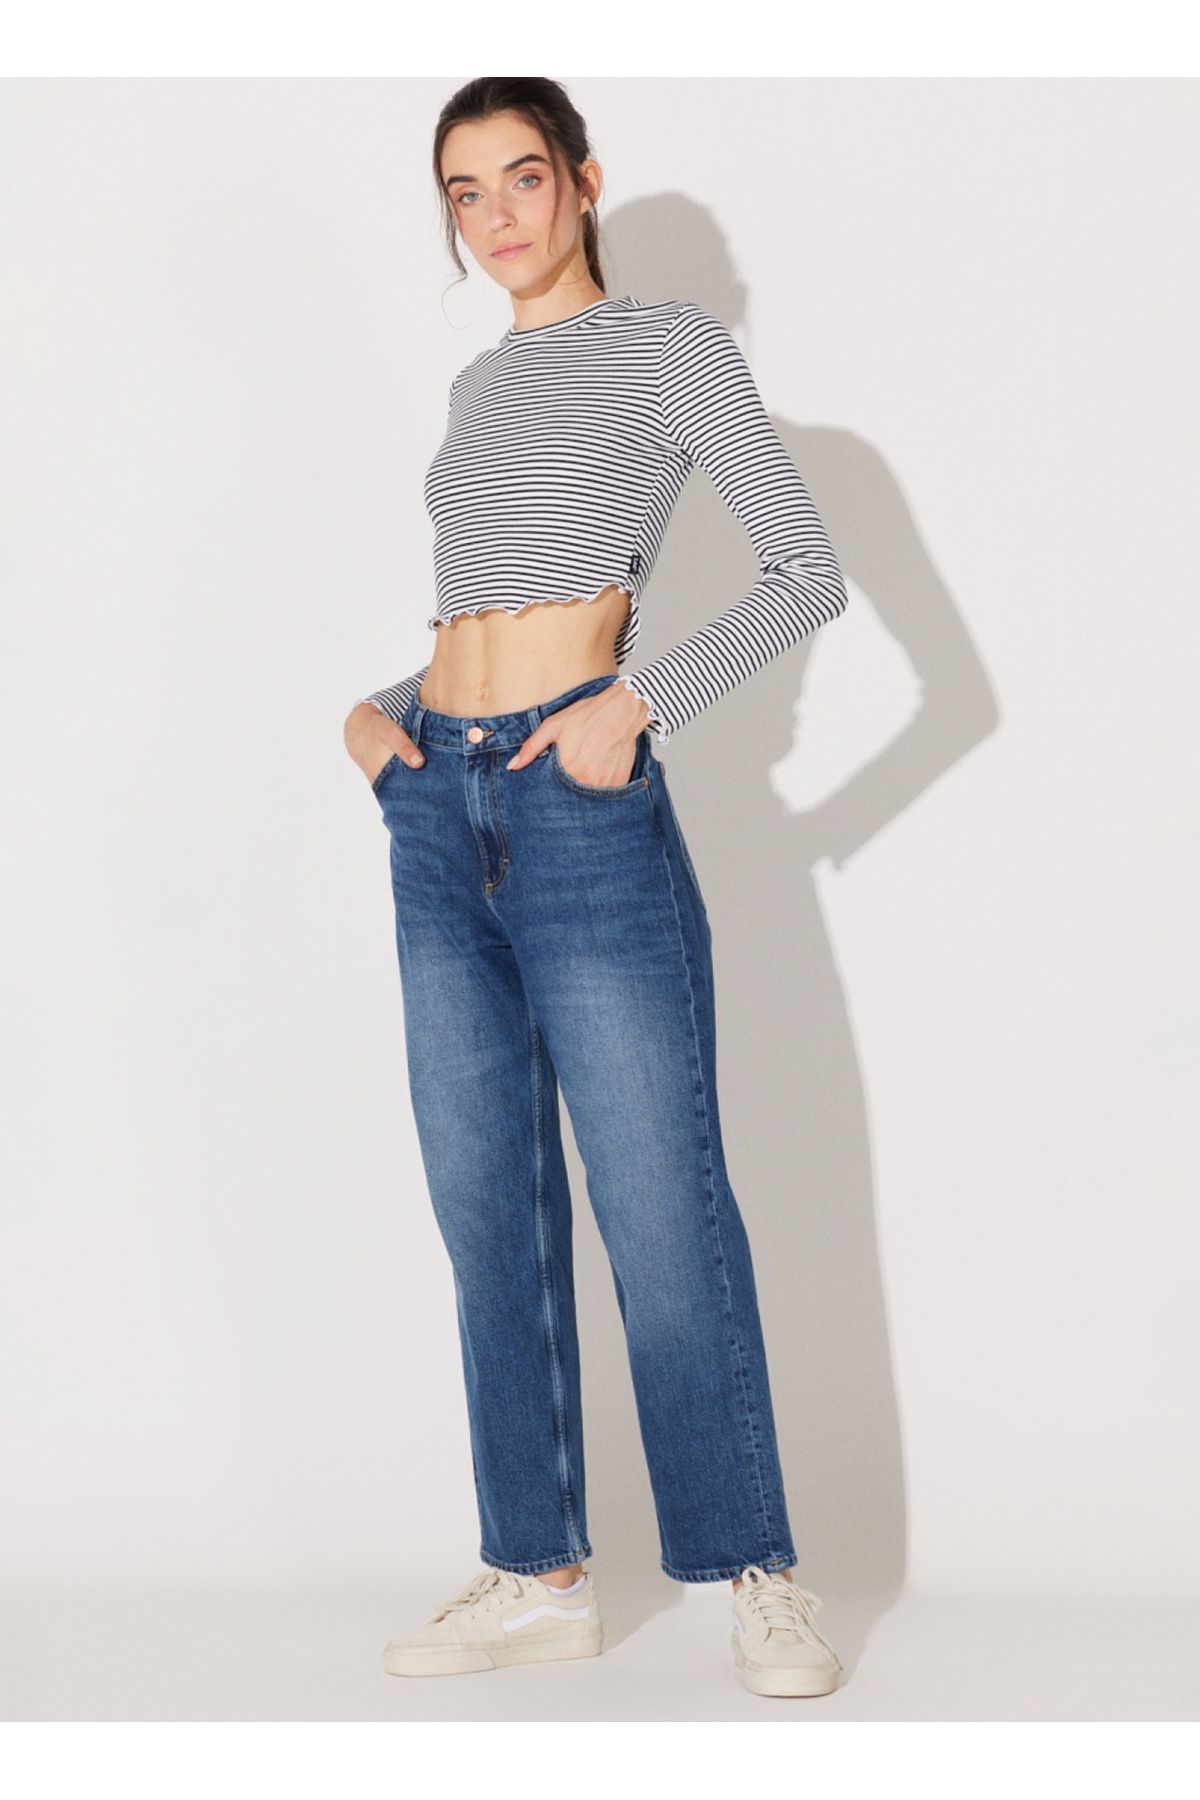 Lee شلوار جین زنانه با کمر صاف ساق آبی رنگ L35FHGD75-آبی